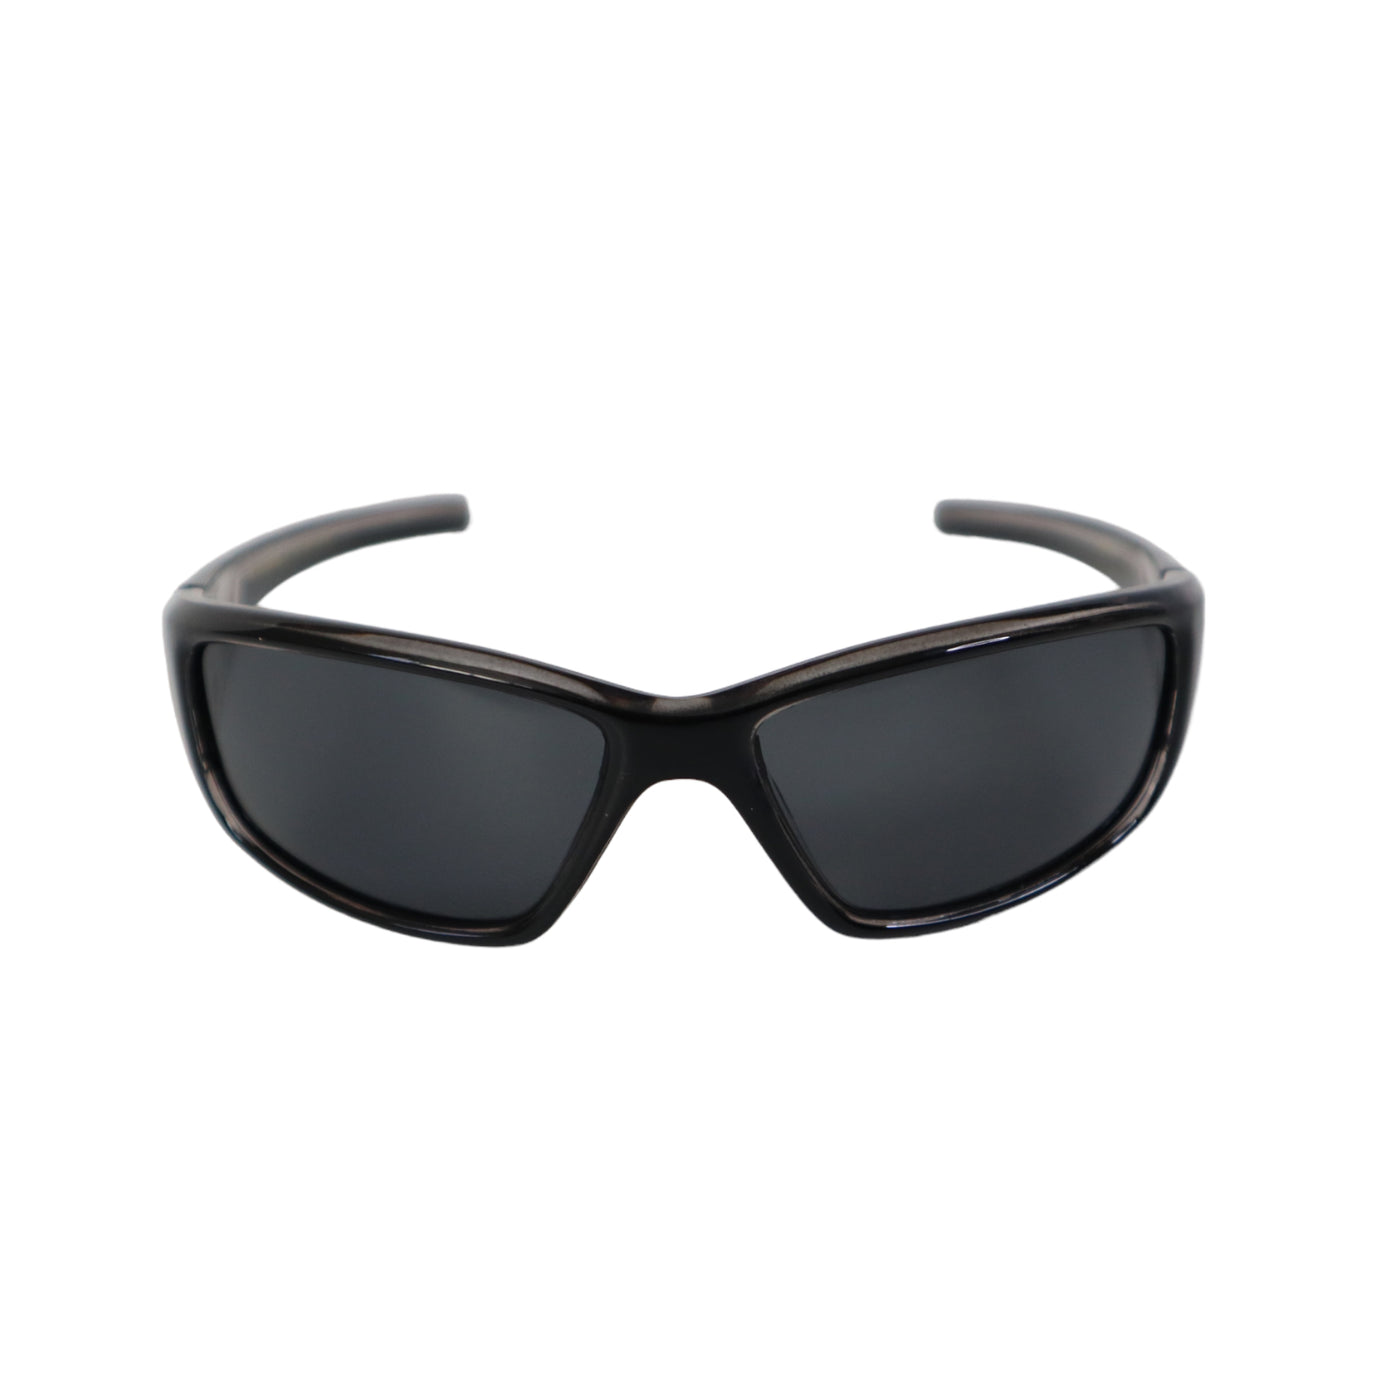 NITROGEN CLEAR Transparent Acrylic Flat Nose Sunglasses w/BLACK Polarized Lens